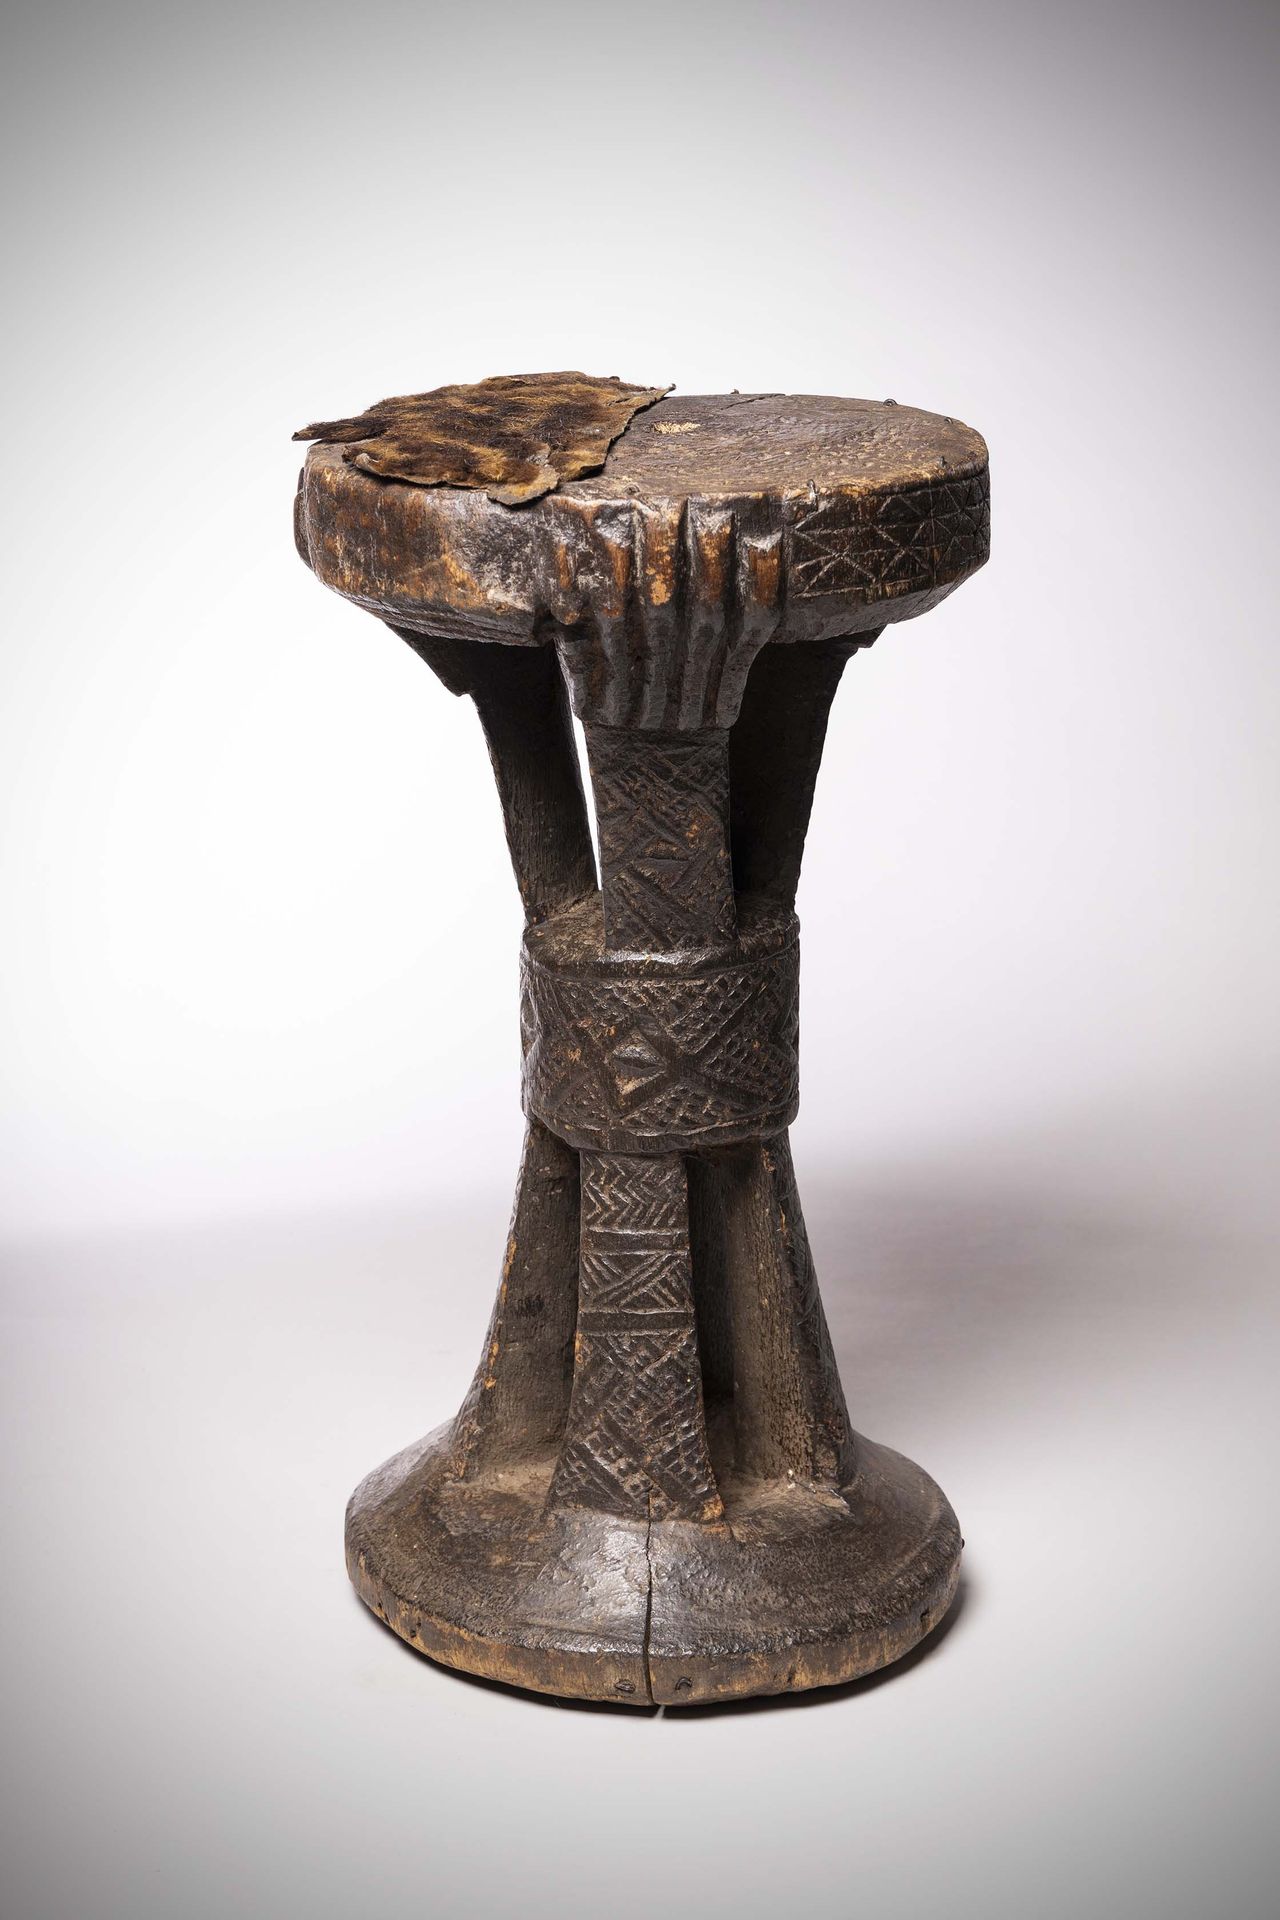 Null 库巴

( 刚果共和国) 非常古老的木制座椅，有很深的铜锈。

镂空的轴代表四个细长的柱子支撑着上面的托盘

(磨损和小部件缺失）前加比莱收藏，皮埃尔&hellip;